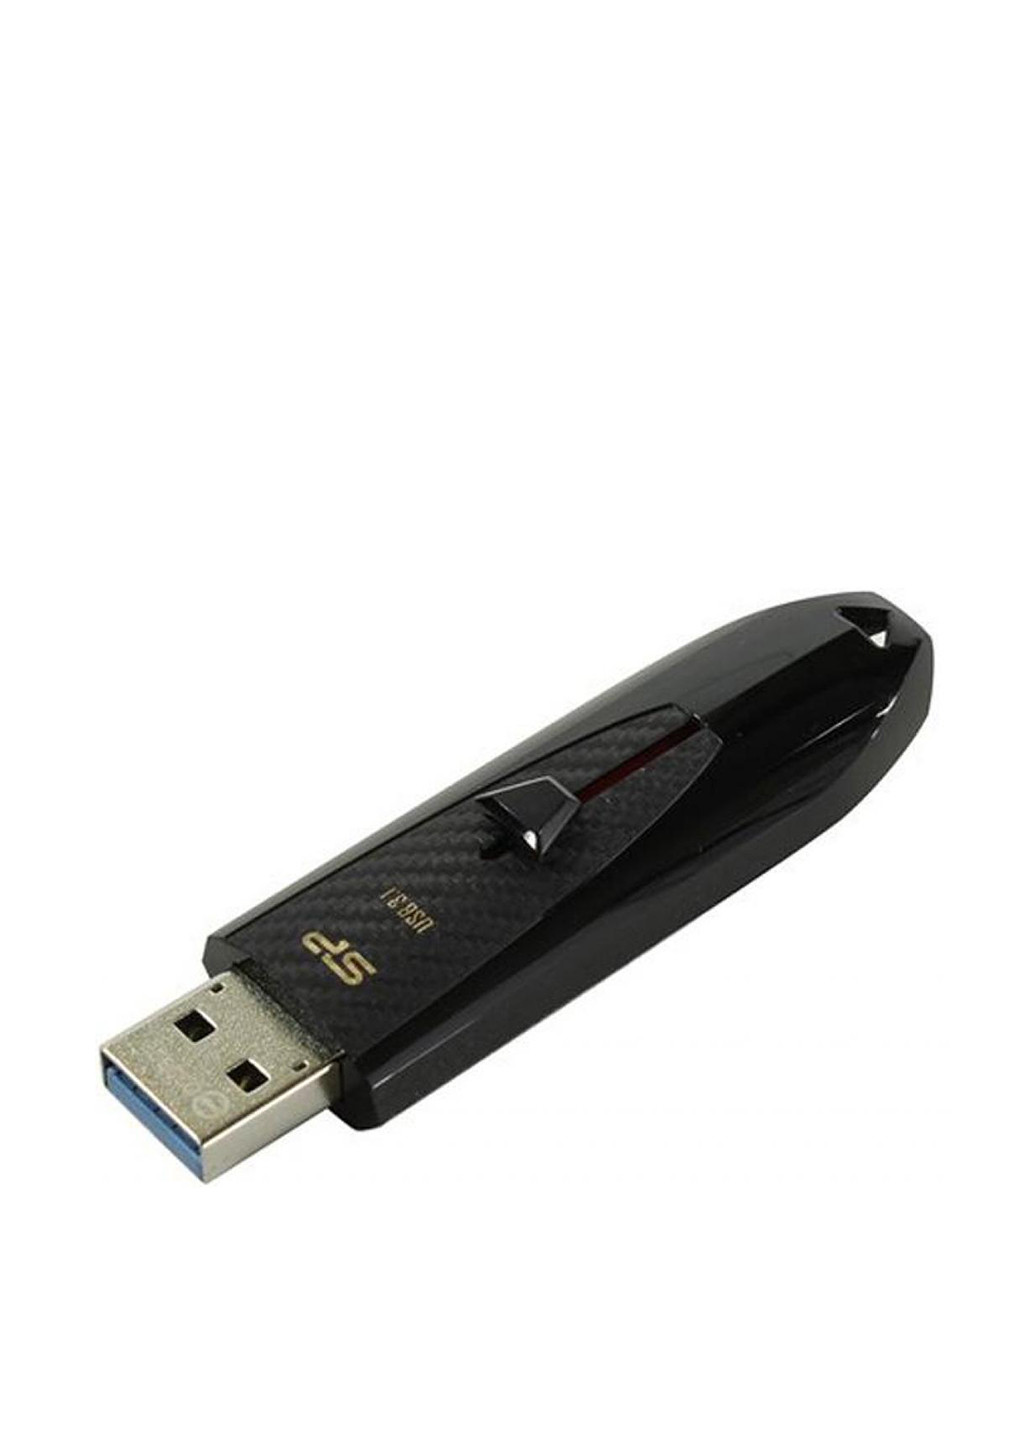 Флеш пам'ять USB Blaze B25 16GB USB 3.0 Black (SP016GBUF3B25V1K) Silicon Power флеш память usb silicon power blaze b25 16gb usb 3.0 black (sp016gbuf3b25v1k) (130221132)